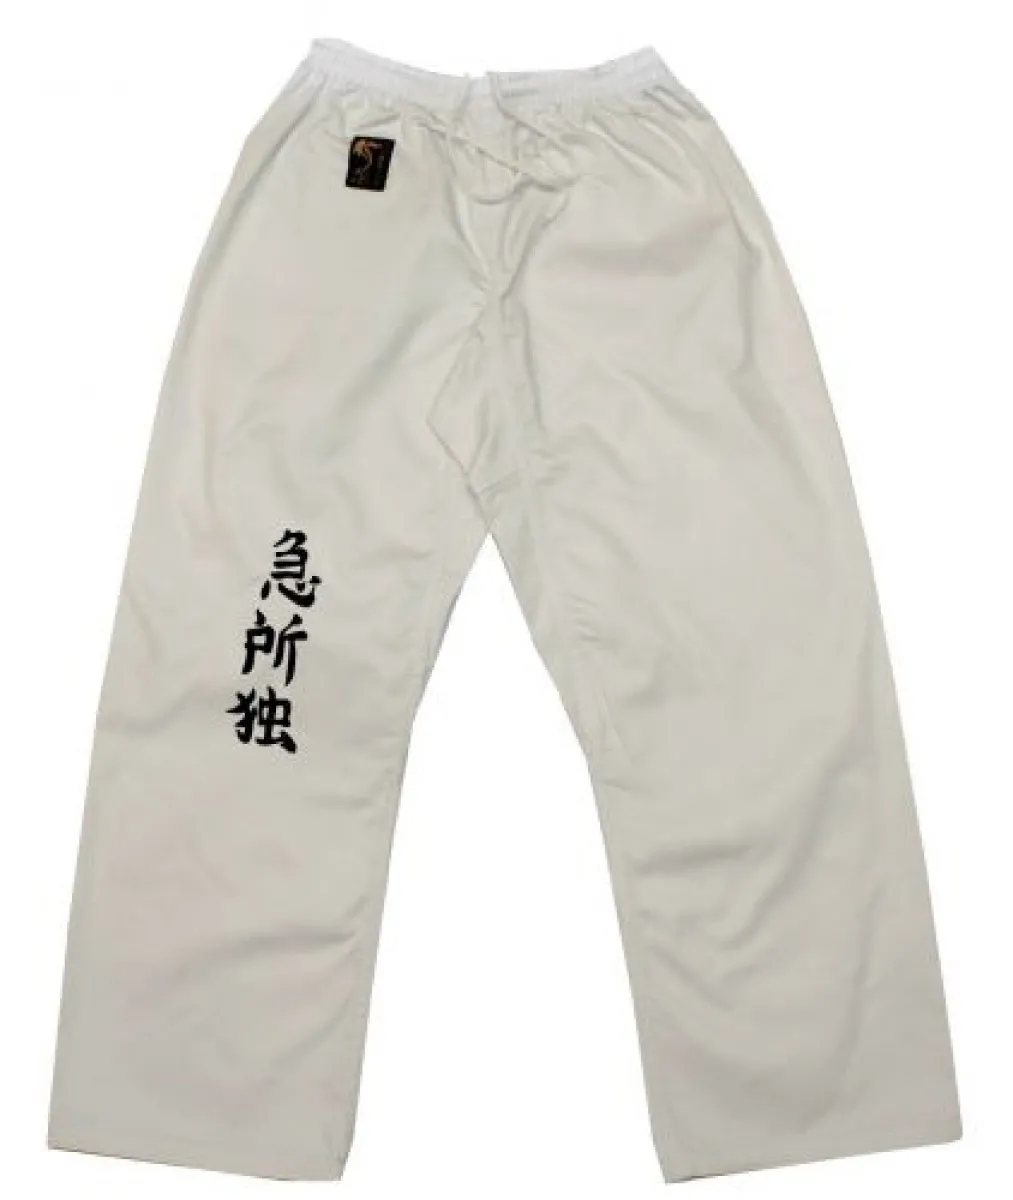 Pantalon d arts martiaux Kyusho blanc